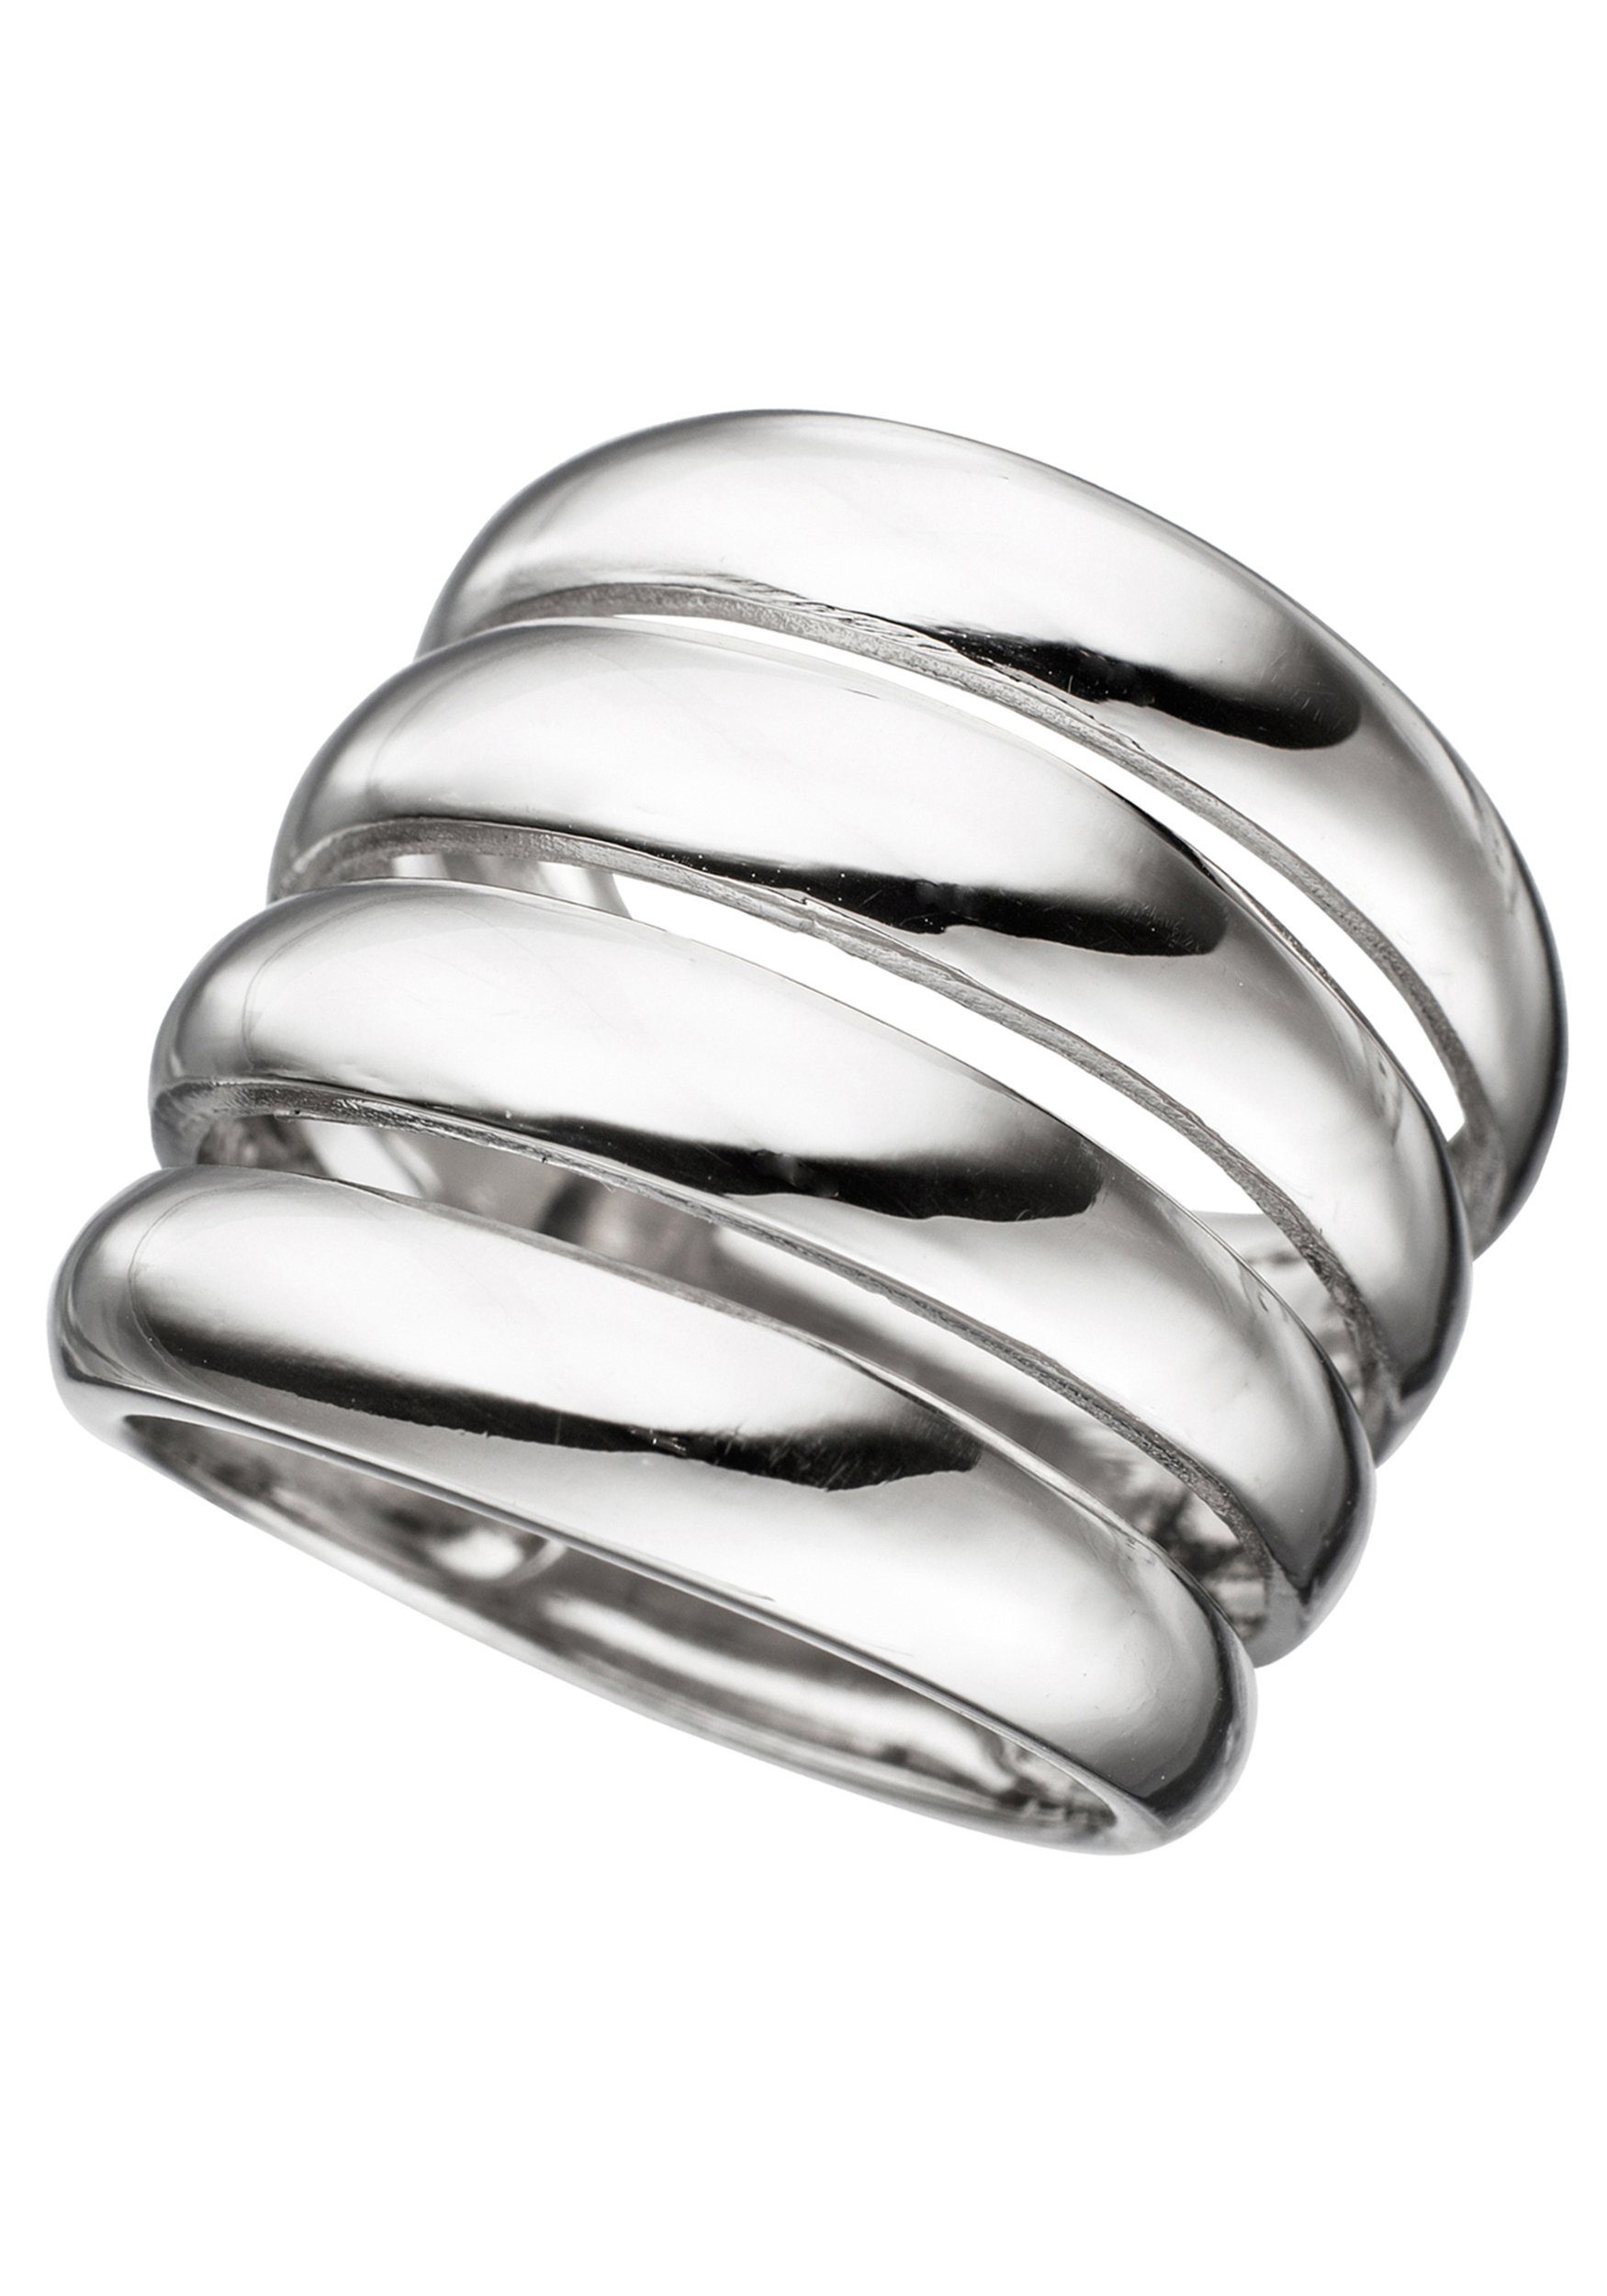 JOBO Silberring Breiter Mehrfach-Ring, 925 Silber rhodiniert